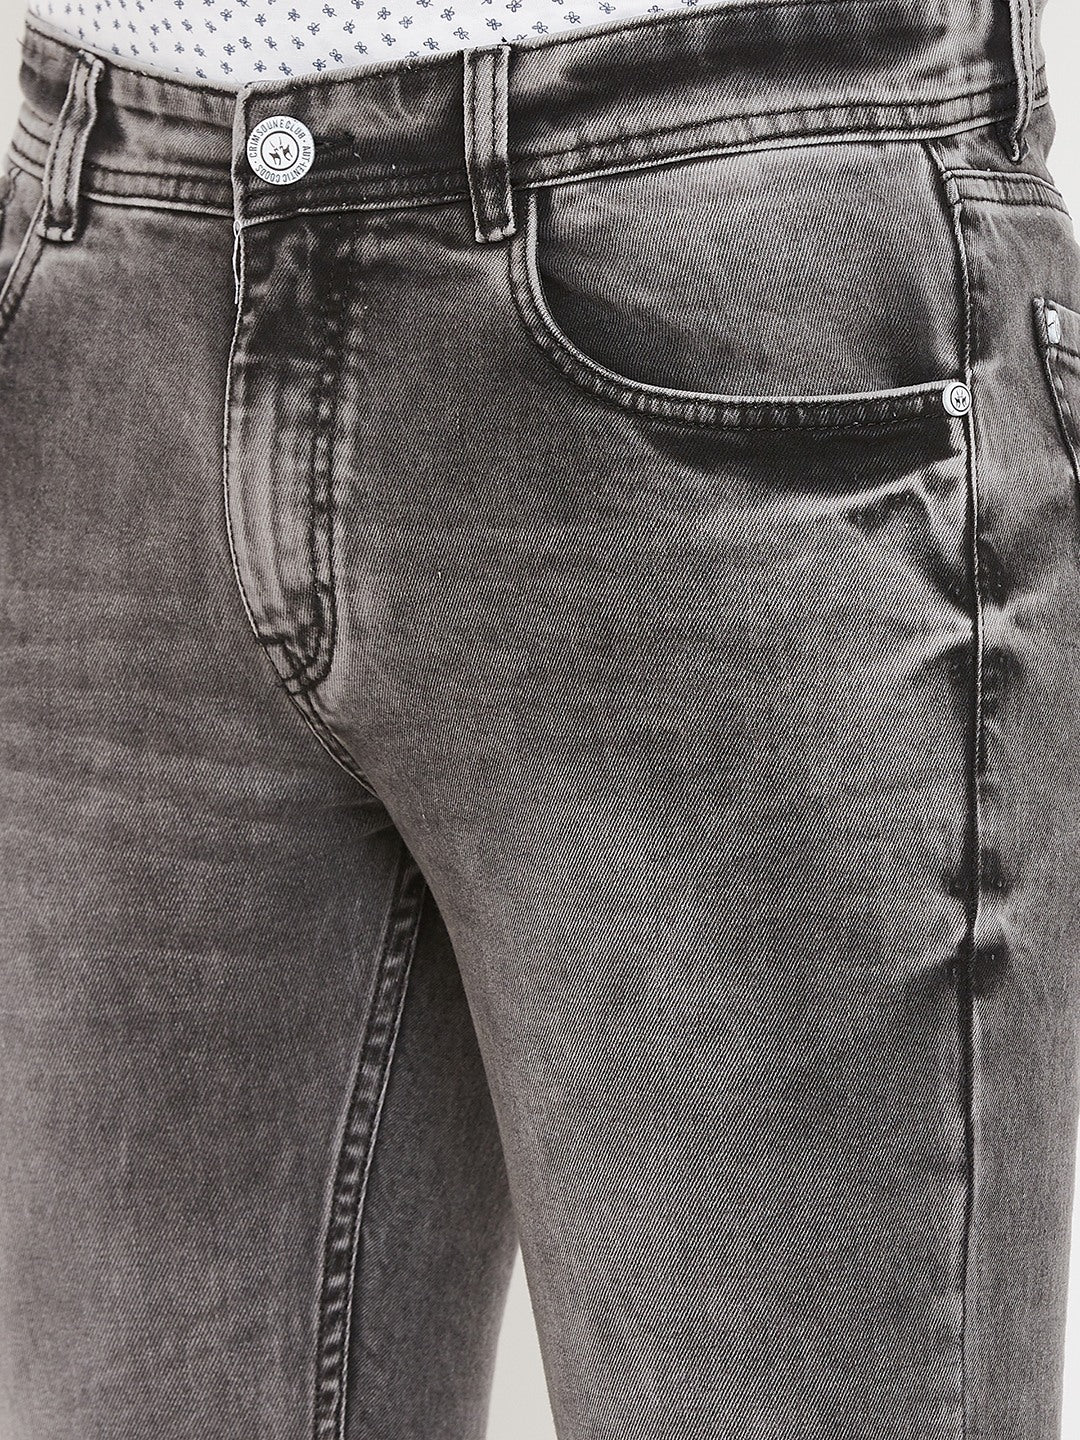 Grey Slim Fit Stretchable Jeans - Men Jeans